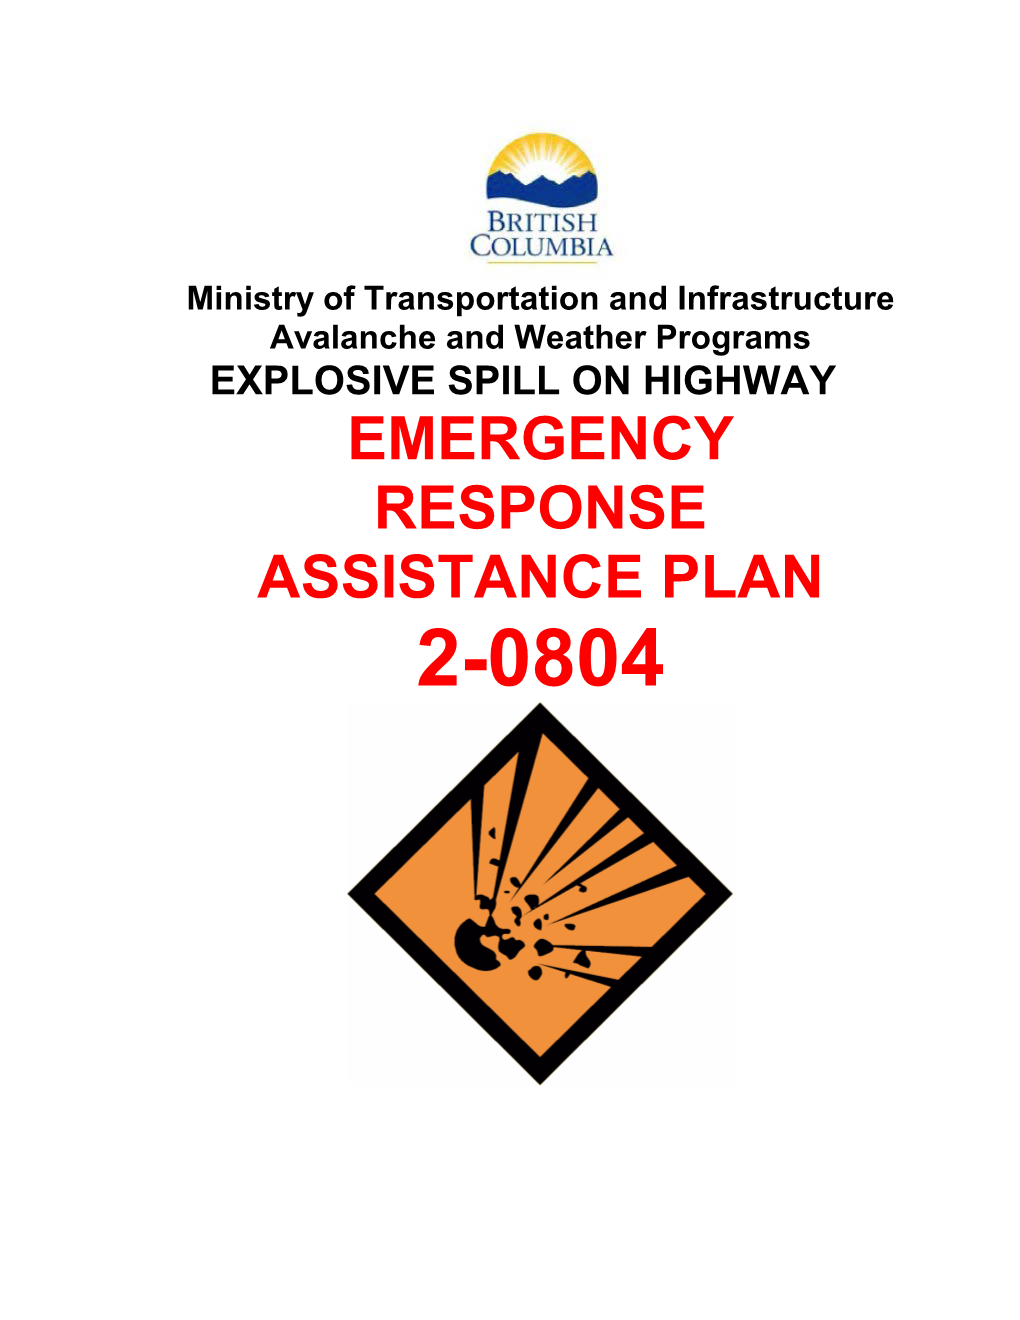 Emergency Response Assistance Plan 2-0804